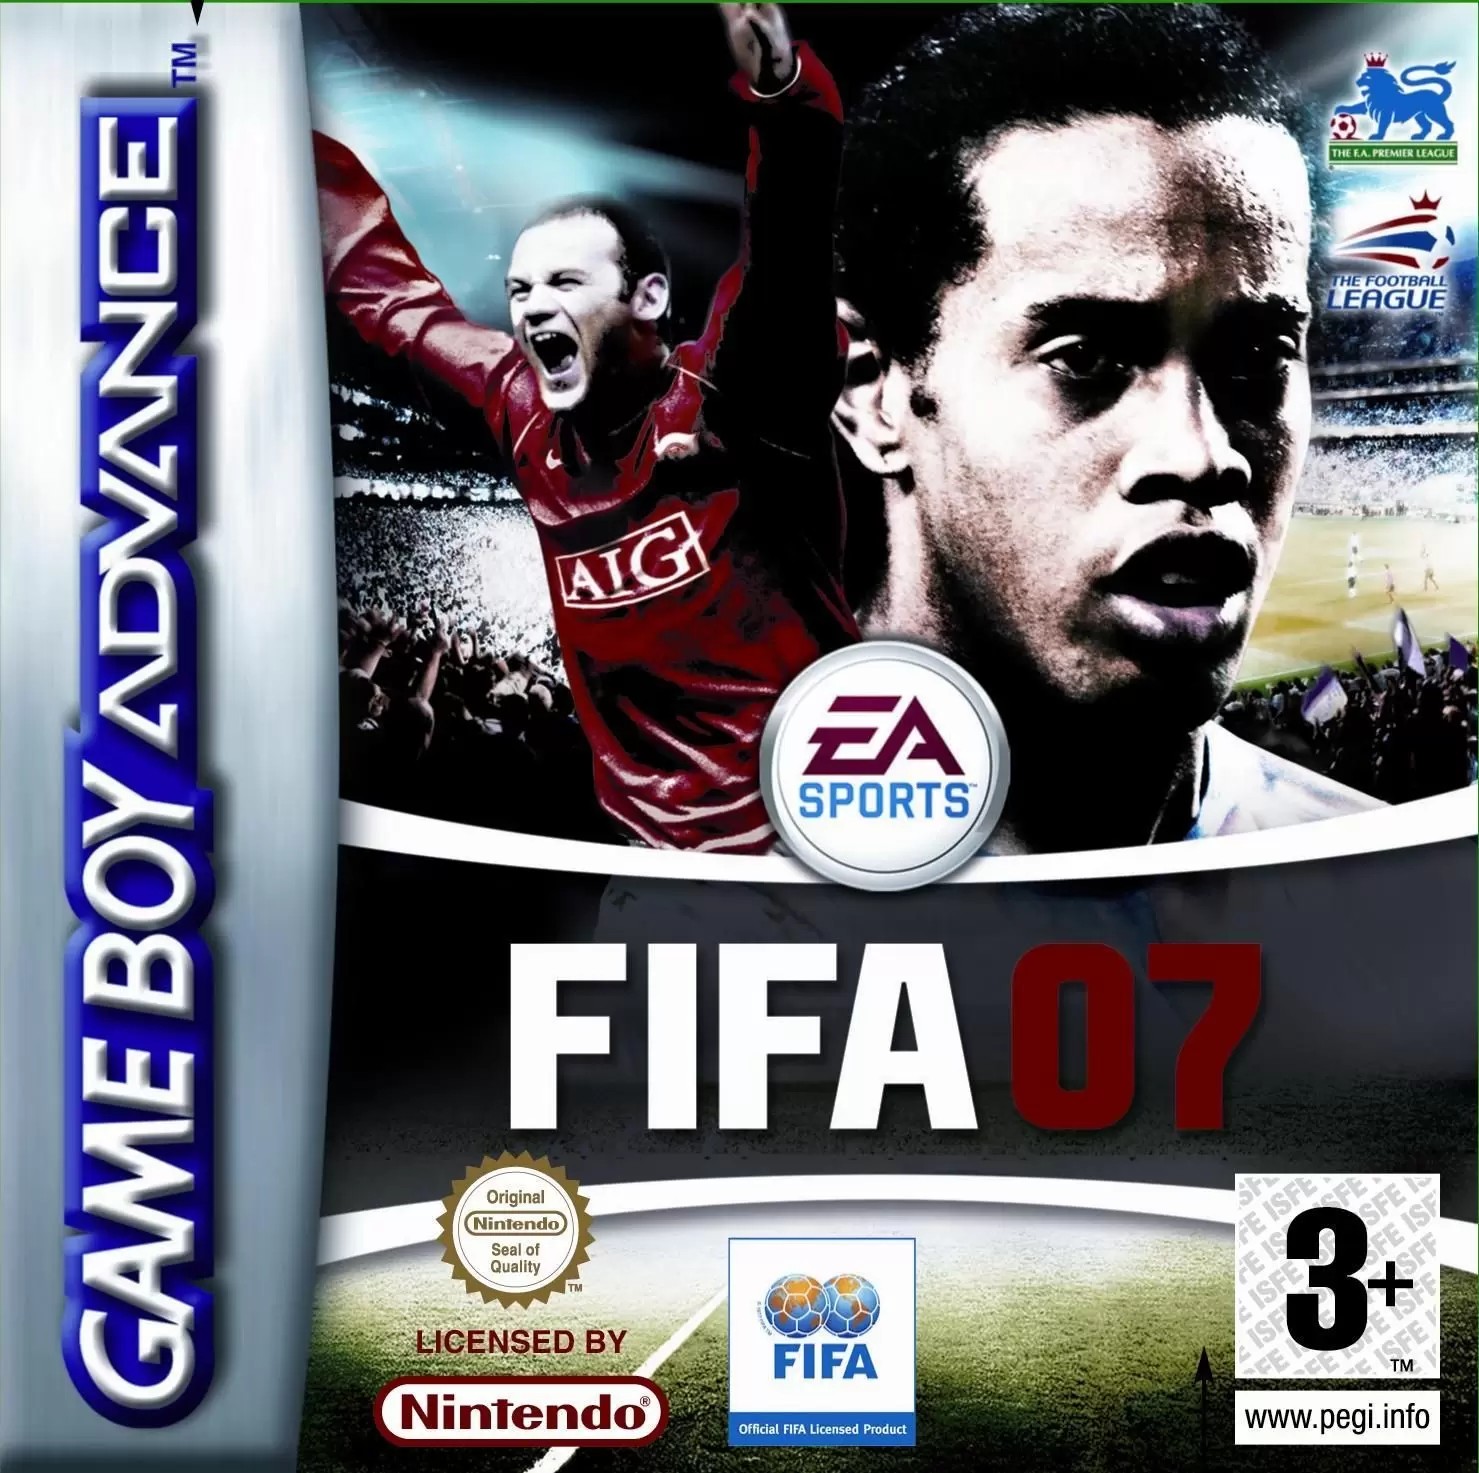 Game Boy Advance Games - FIFA Soccer 07